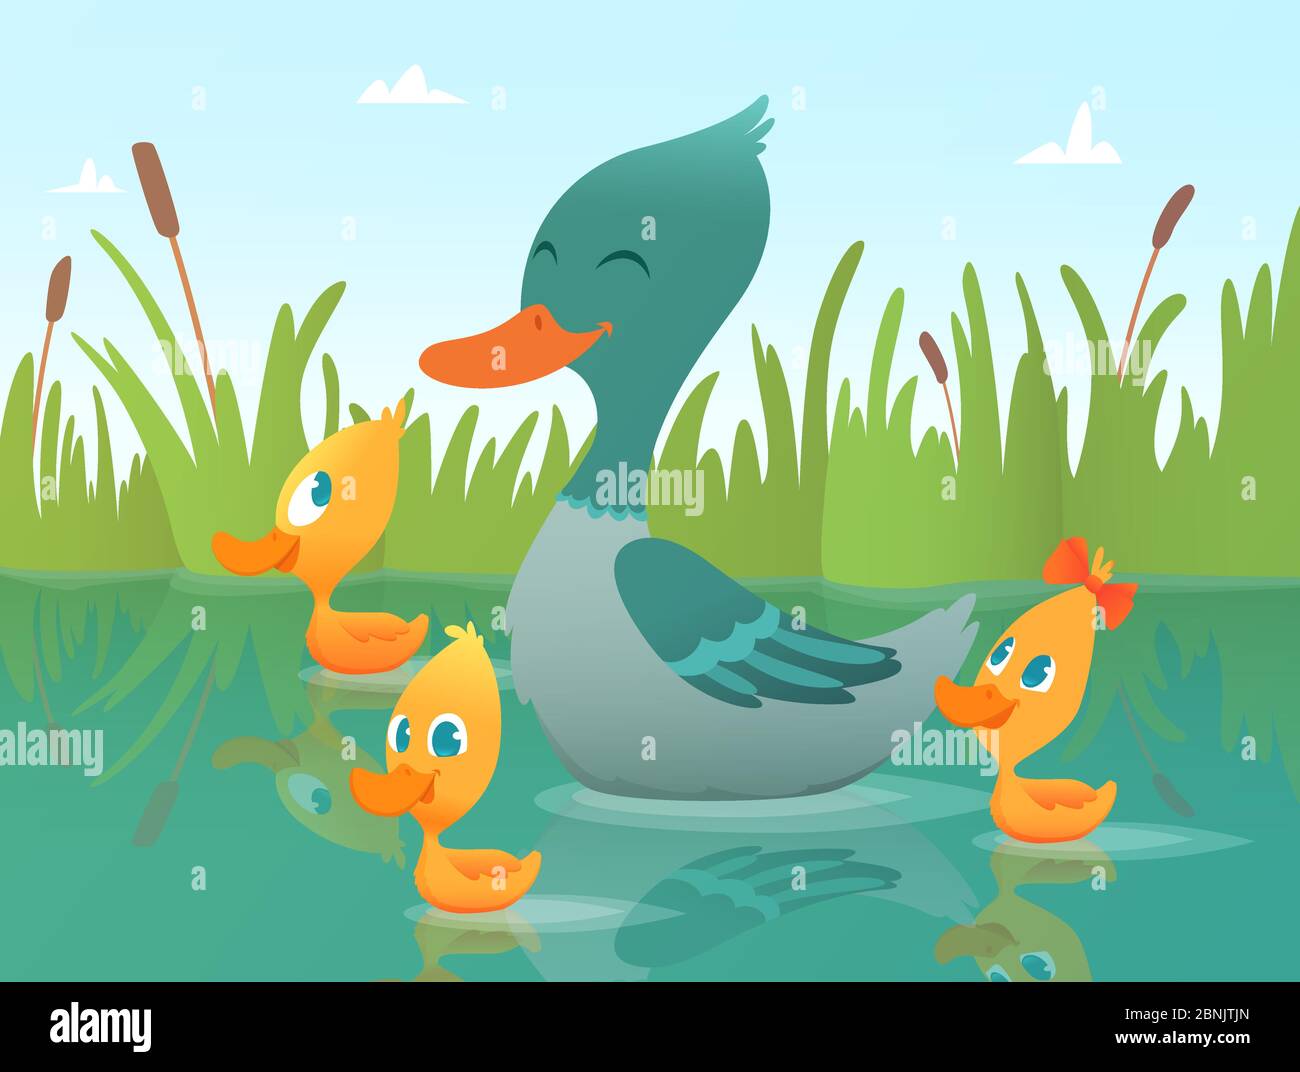 Background cartoon duck. Illustrations of funny ducks Stock Vector